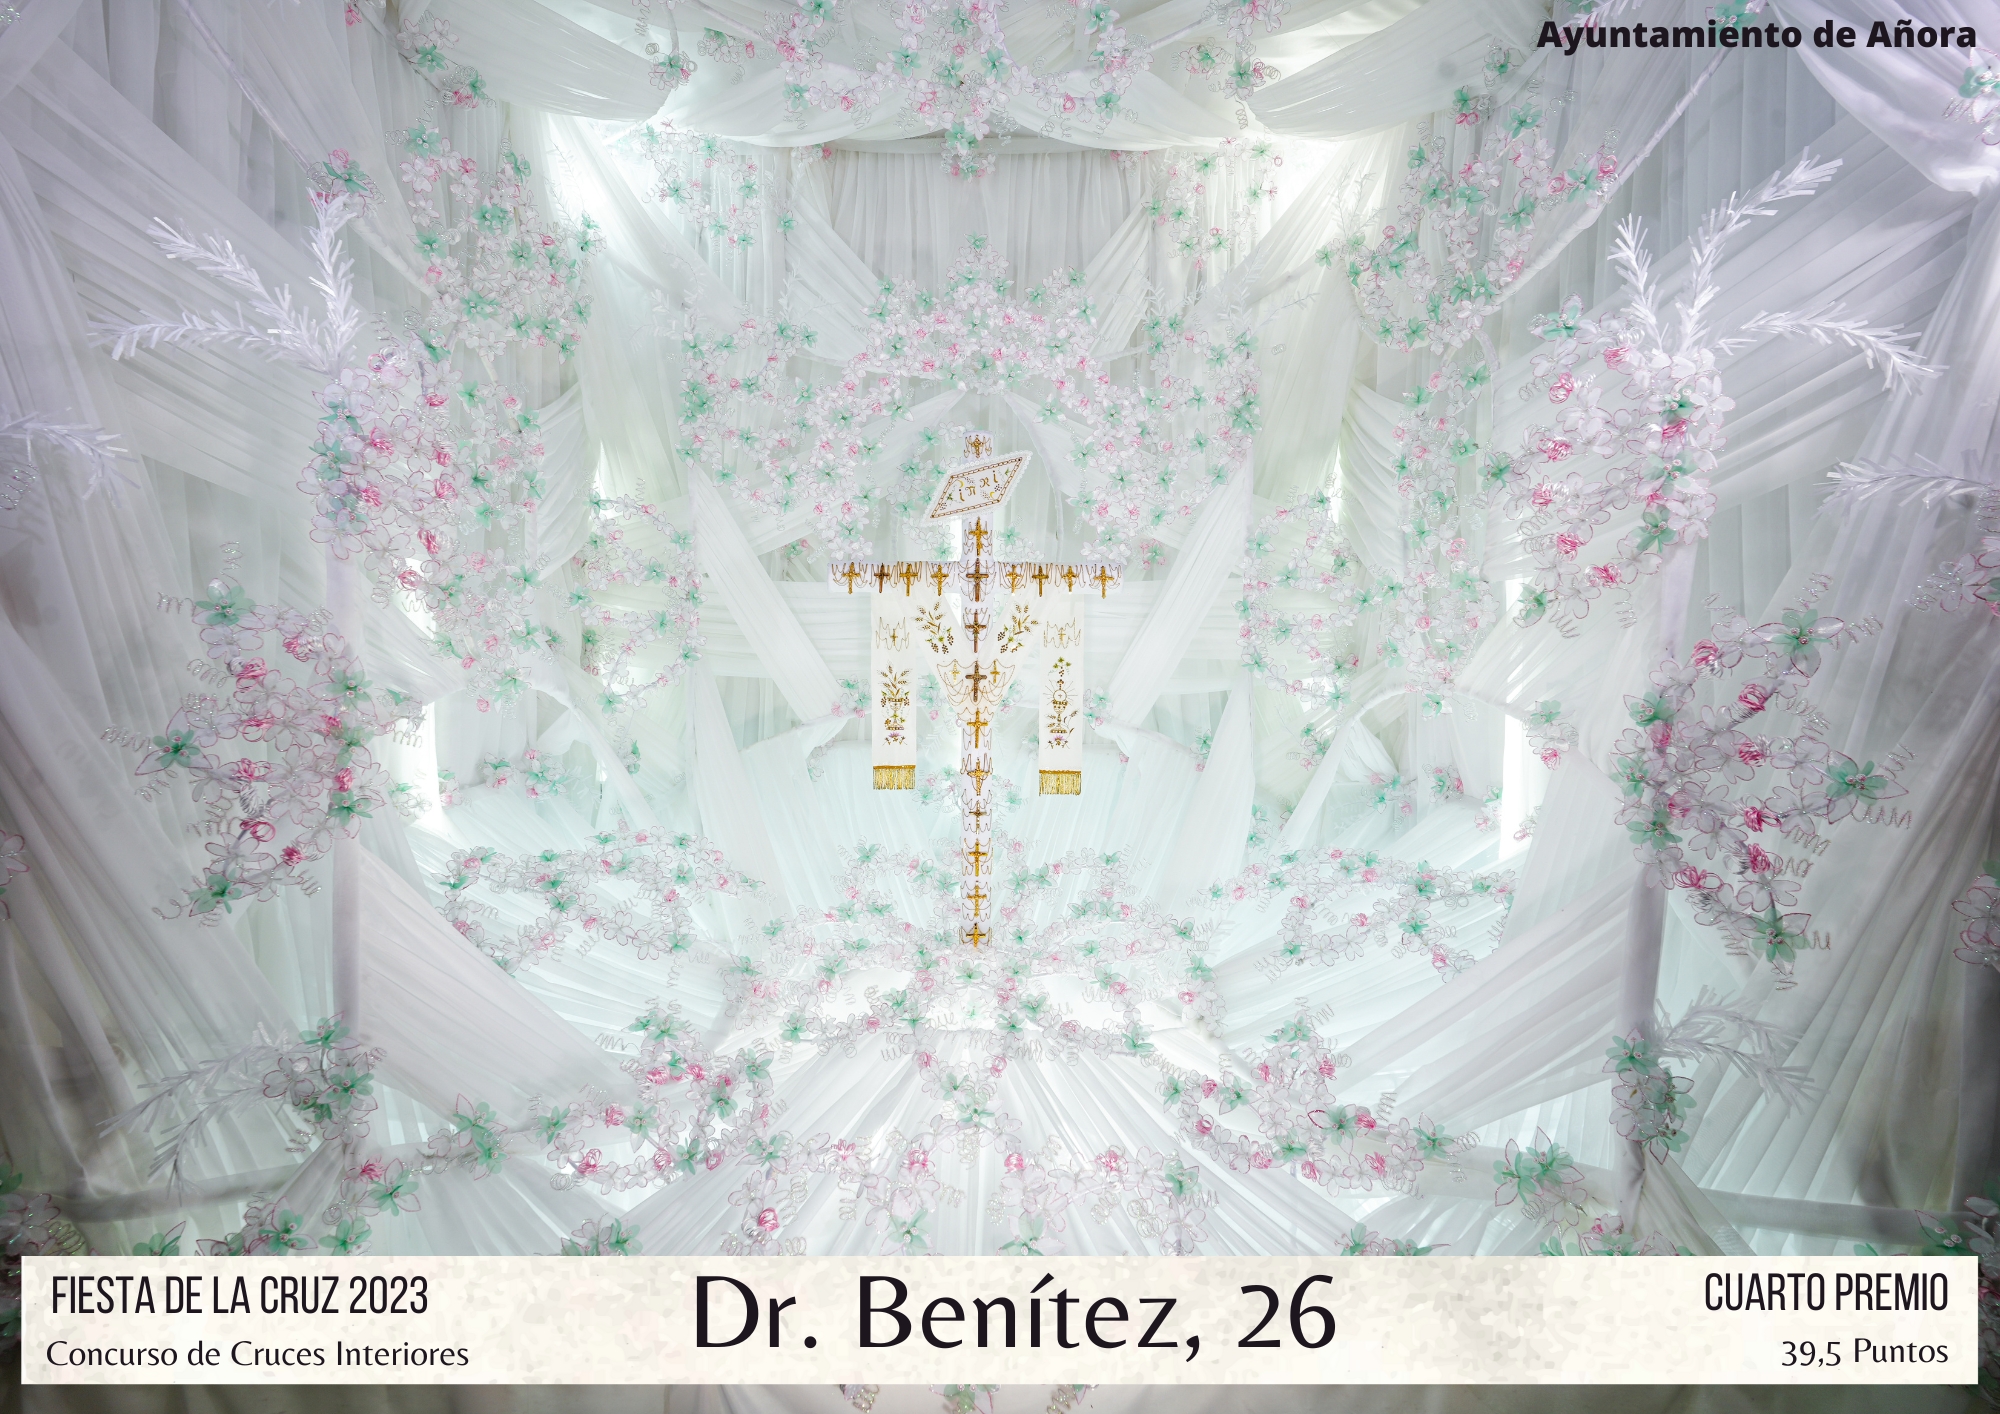 4. Dr. Benitez